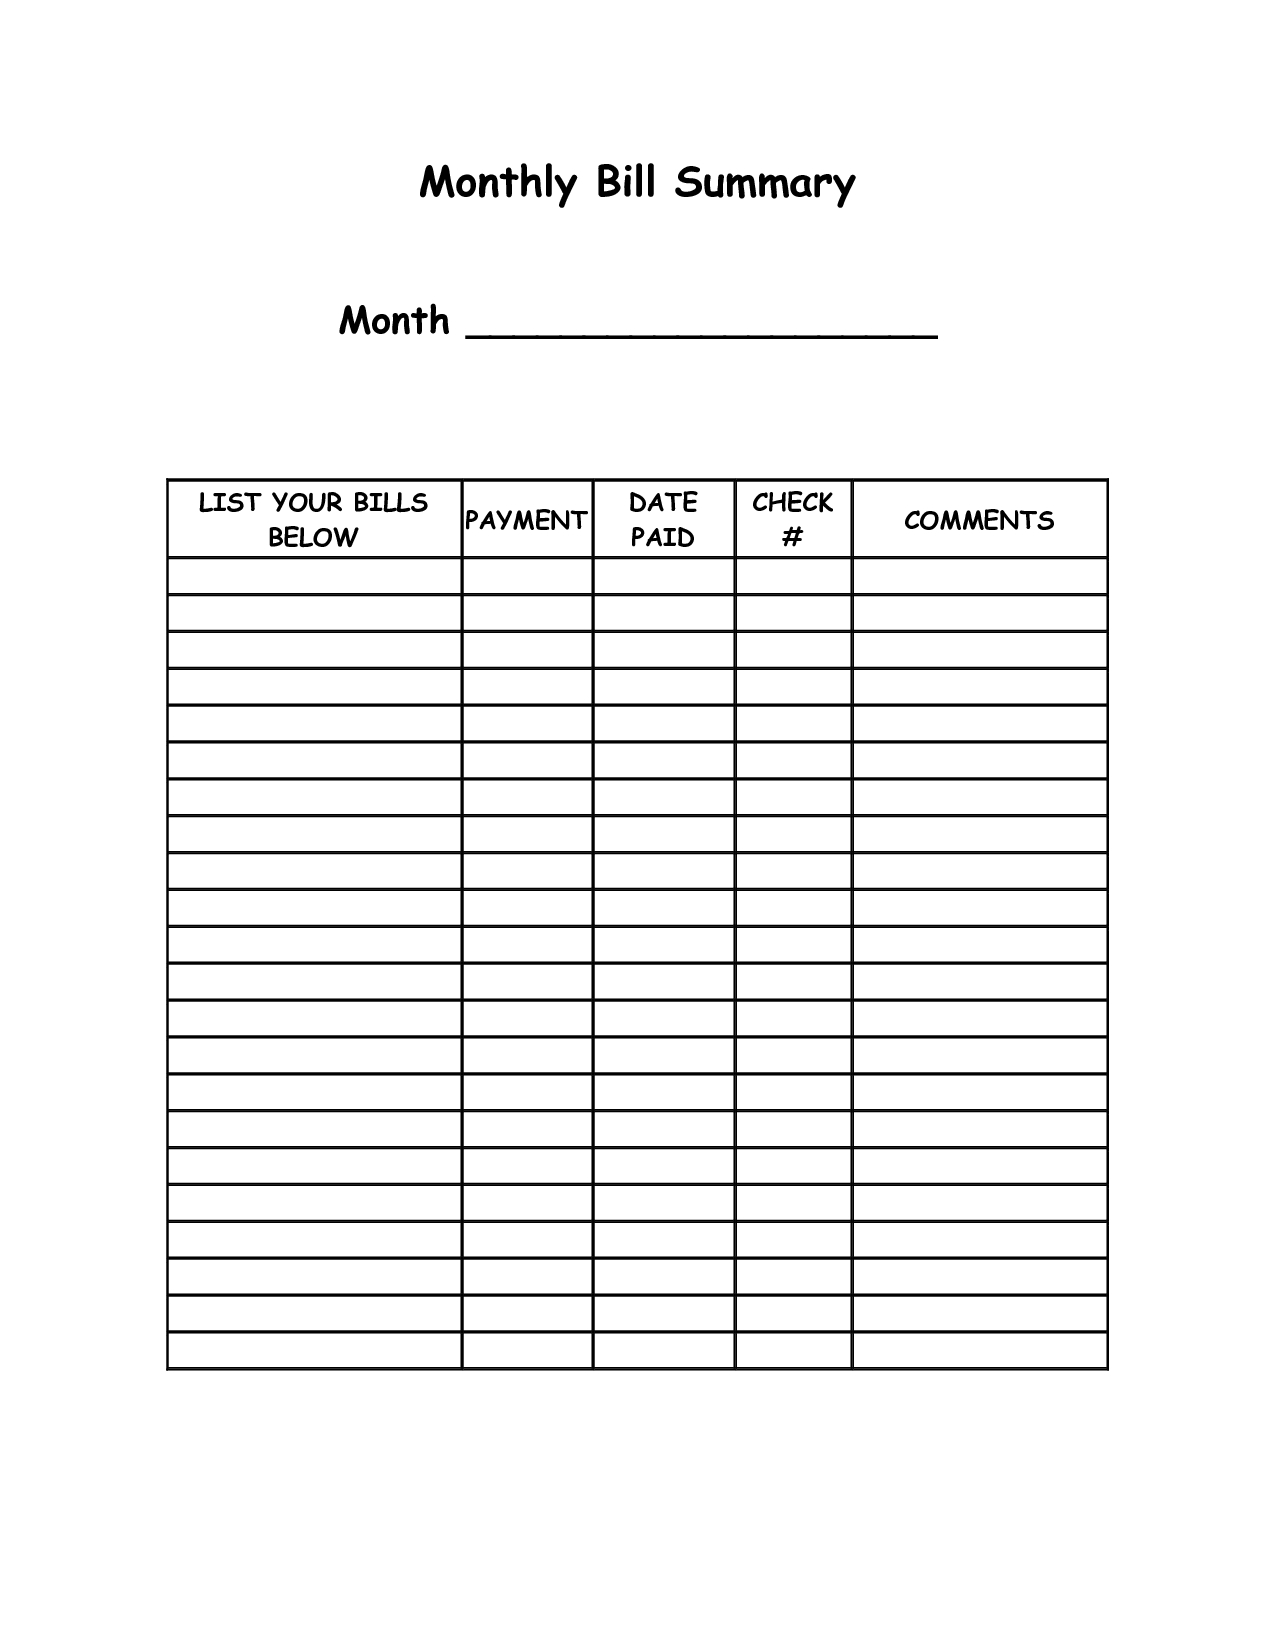 Monthly Bill Summary Doc | Organization | Bill Payment Organization regarding Monthly Bills Due List Printable Free